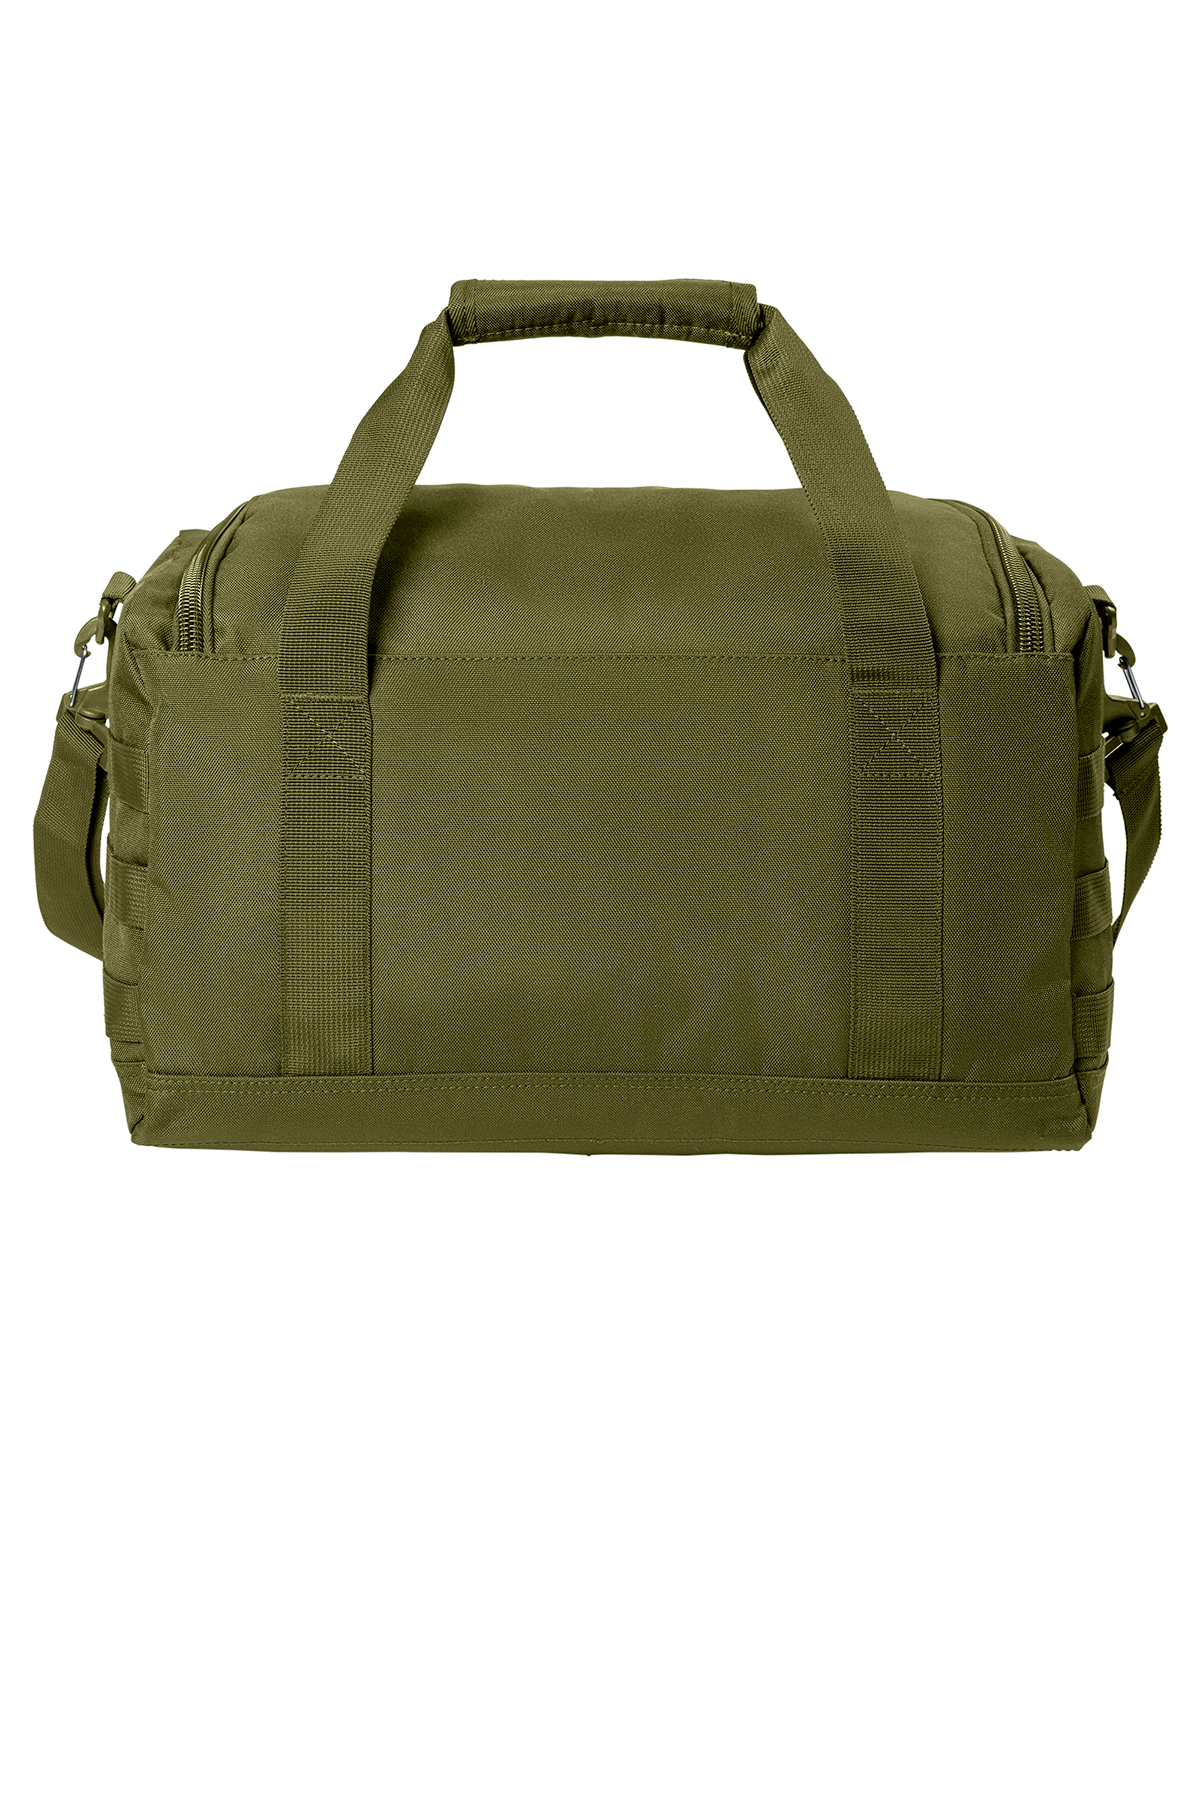 Cornerstone Tactical Gear Bag Csb816 